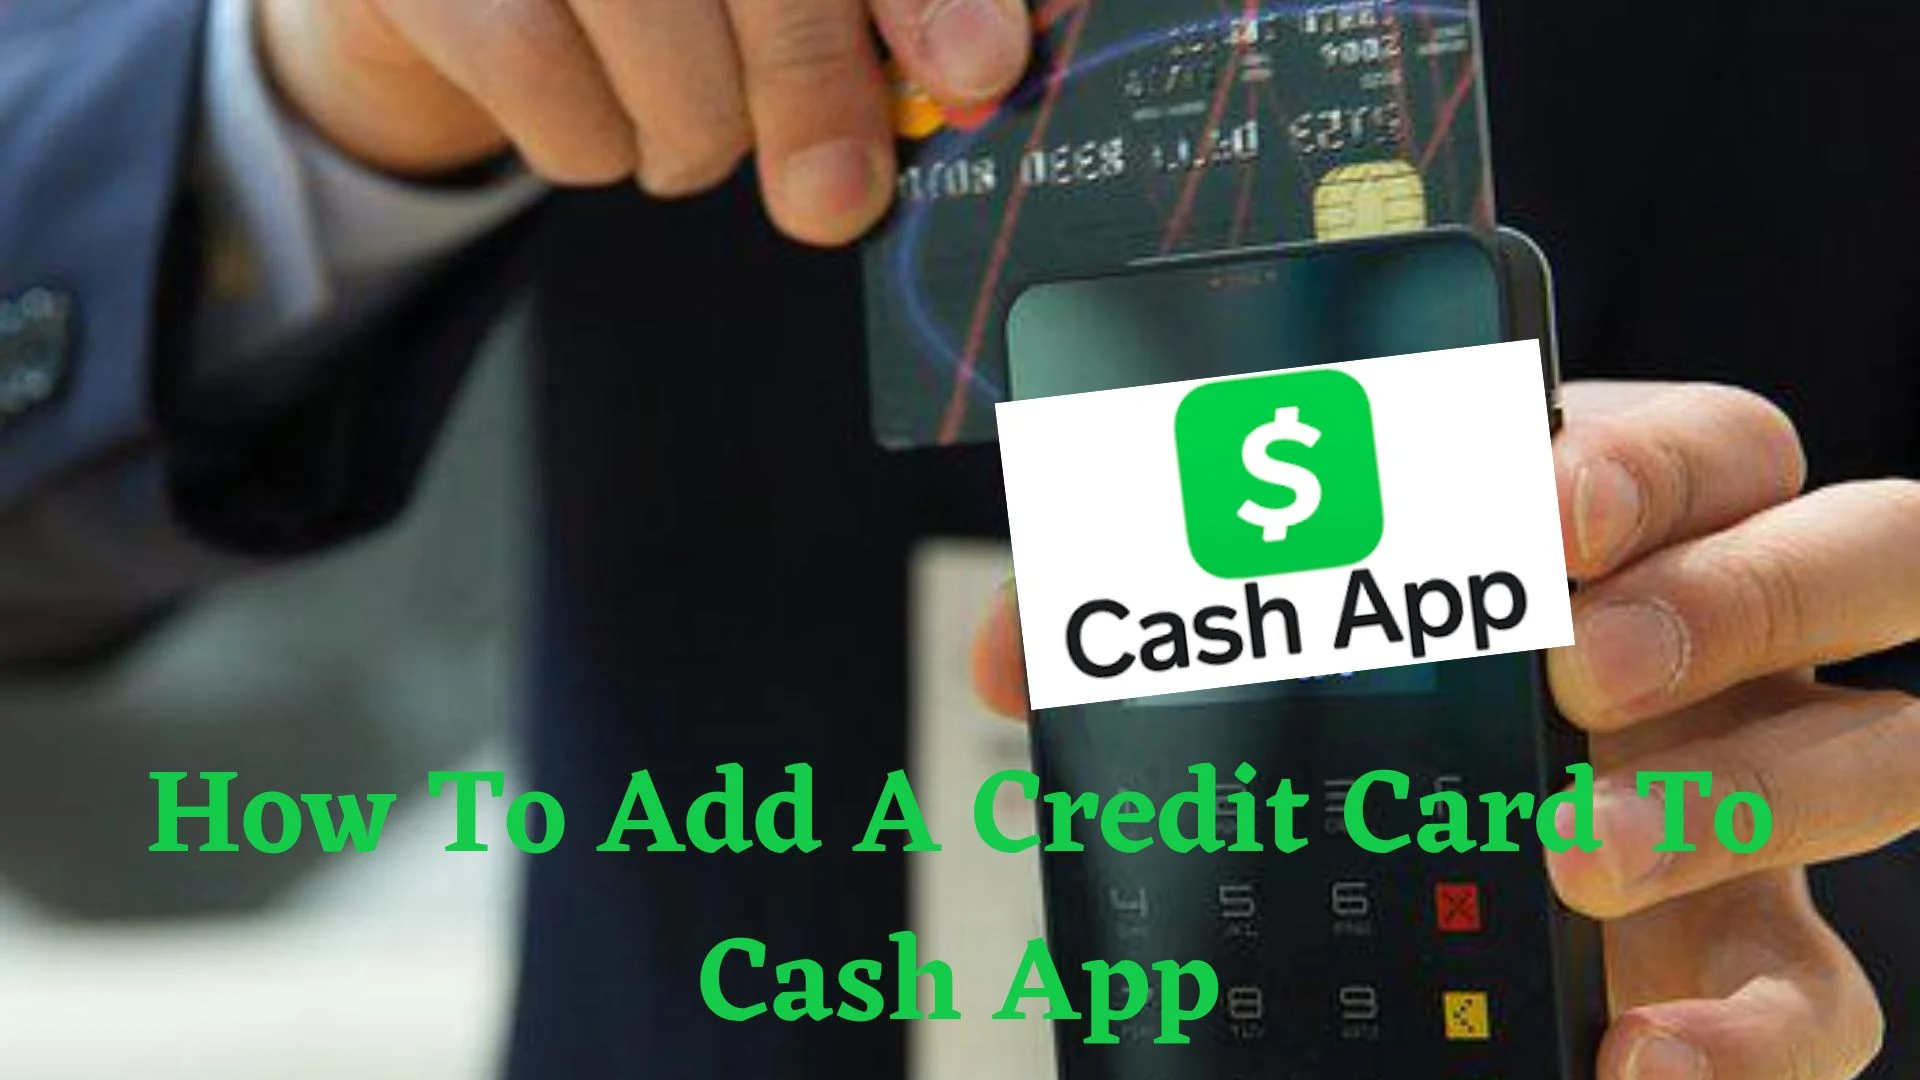 Add A Credit Card To Cash App